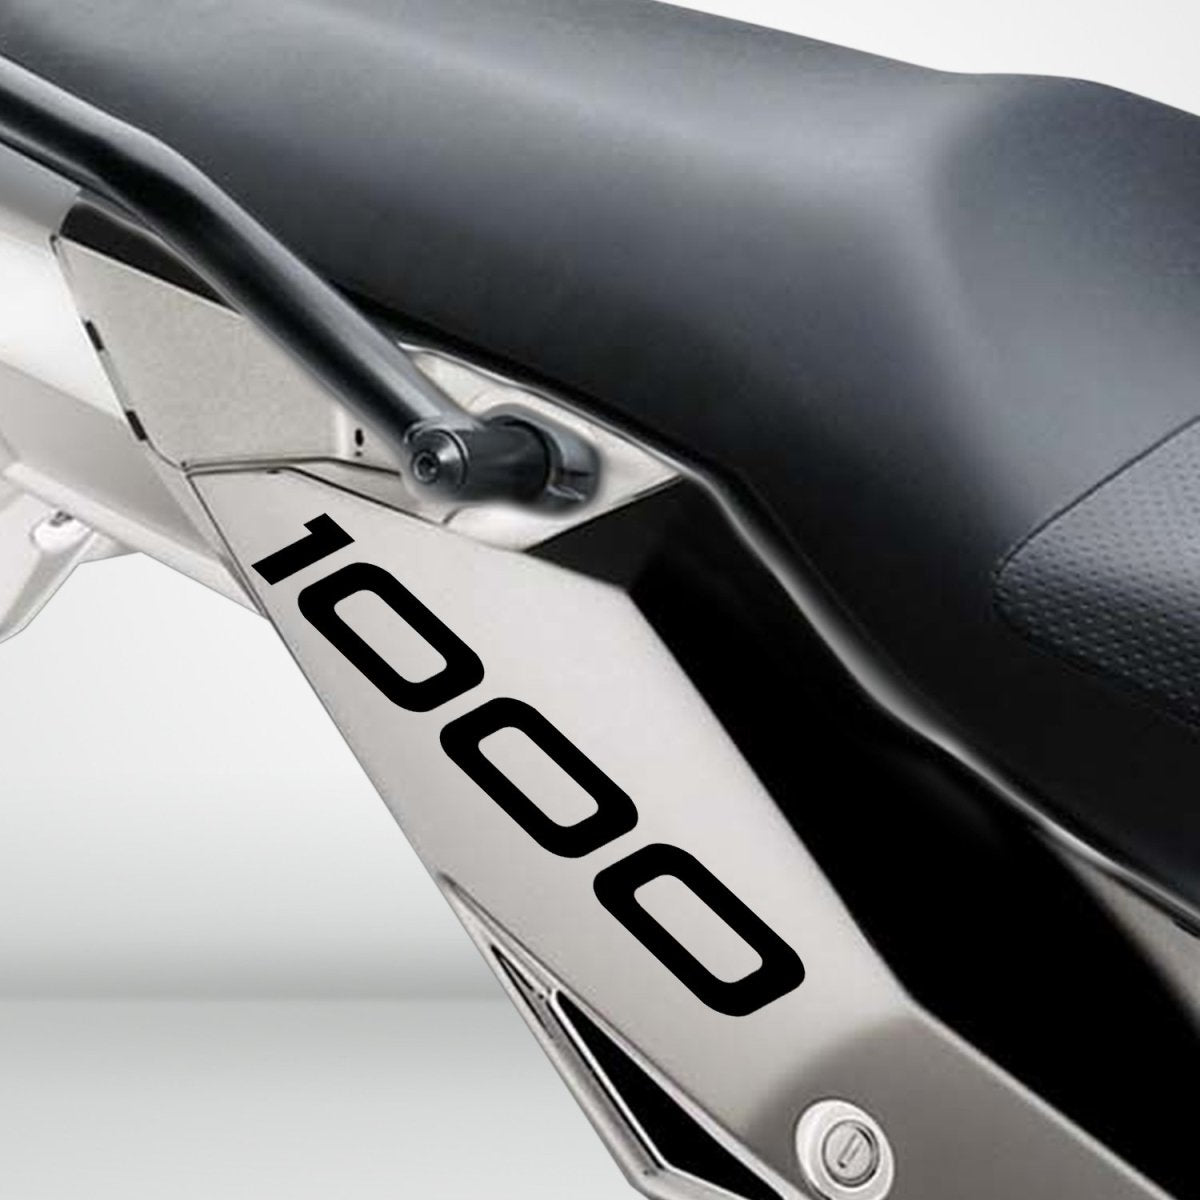 Motorcycle Superbike Sticker Decal Pack Waterproof High quality for Suzuki V-Strom 1000 - Stickman Vinyls